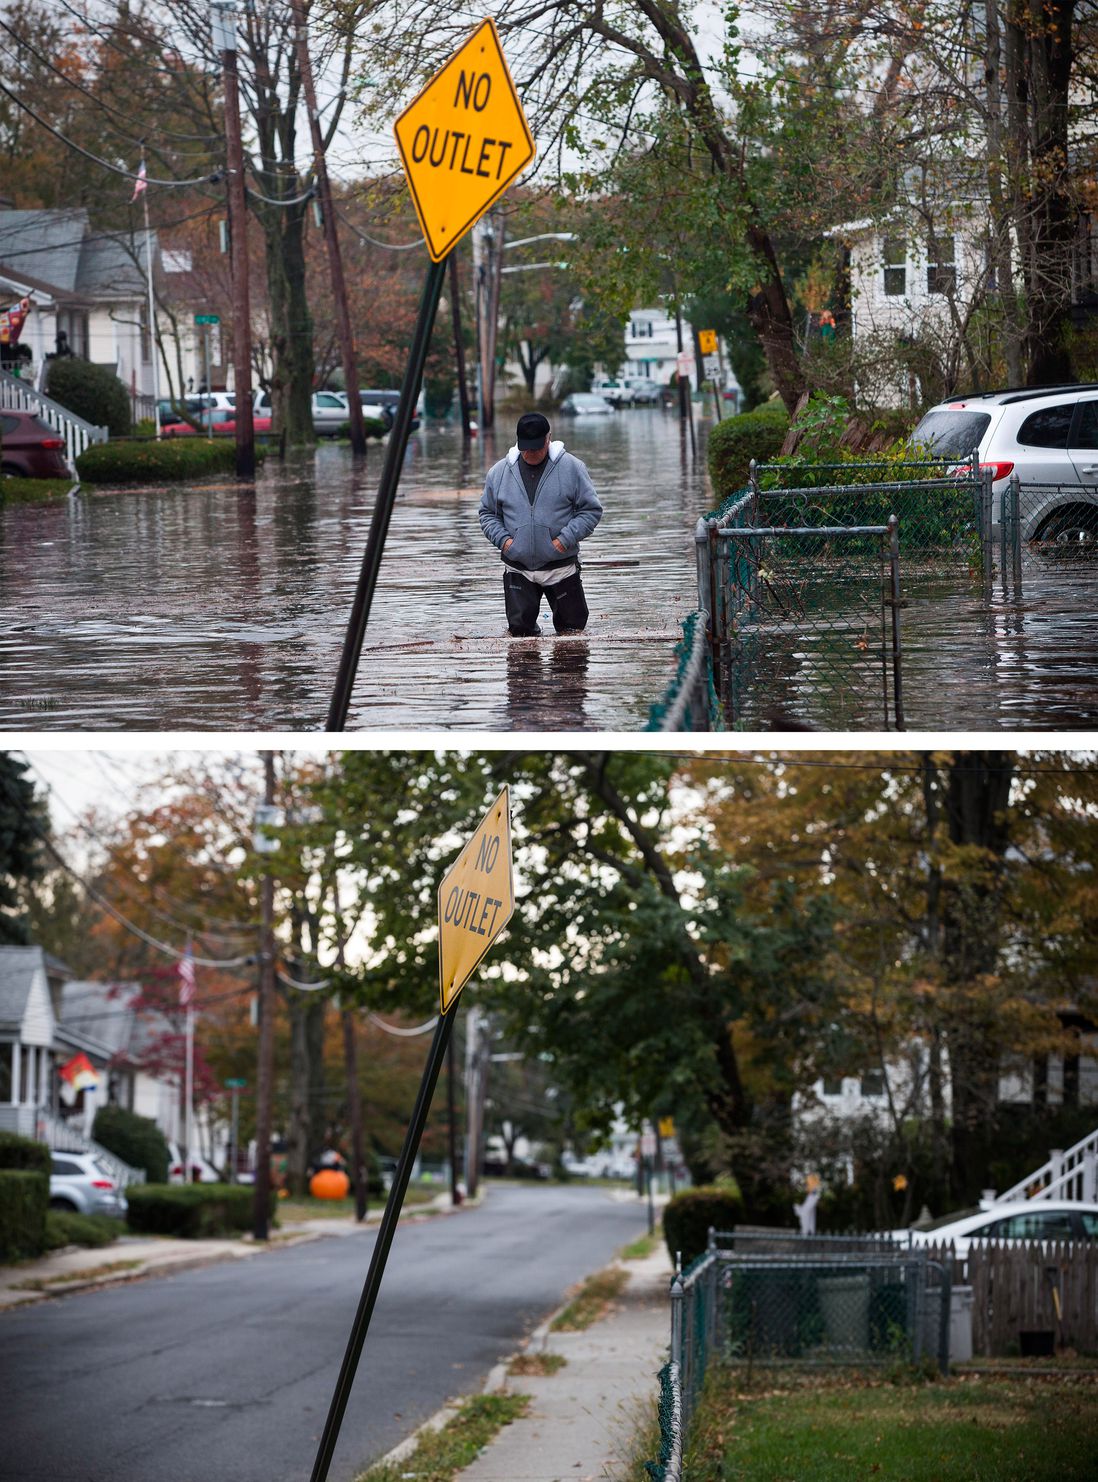 [Top] A man walks through a flooded street after Superstorm Sandy October 30, 2012, in Little Ferry, New Jersey. [Bottom] October 22, 2013.